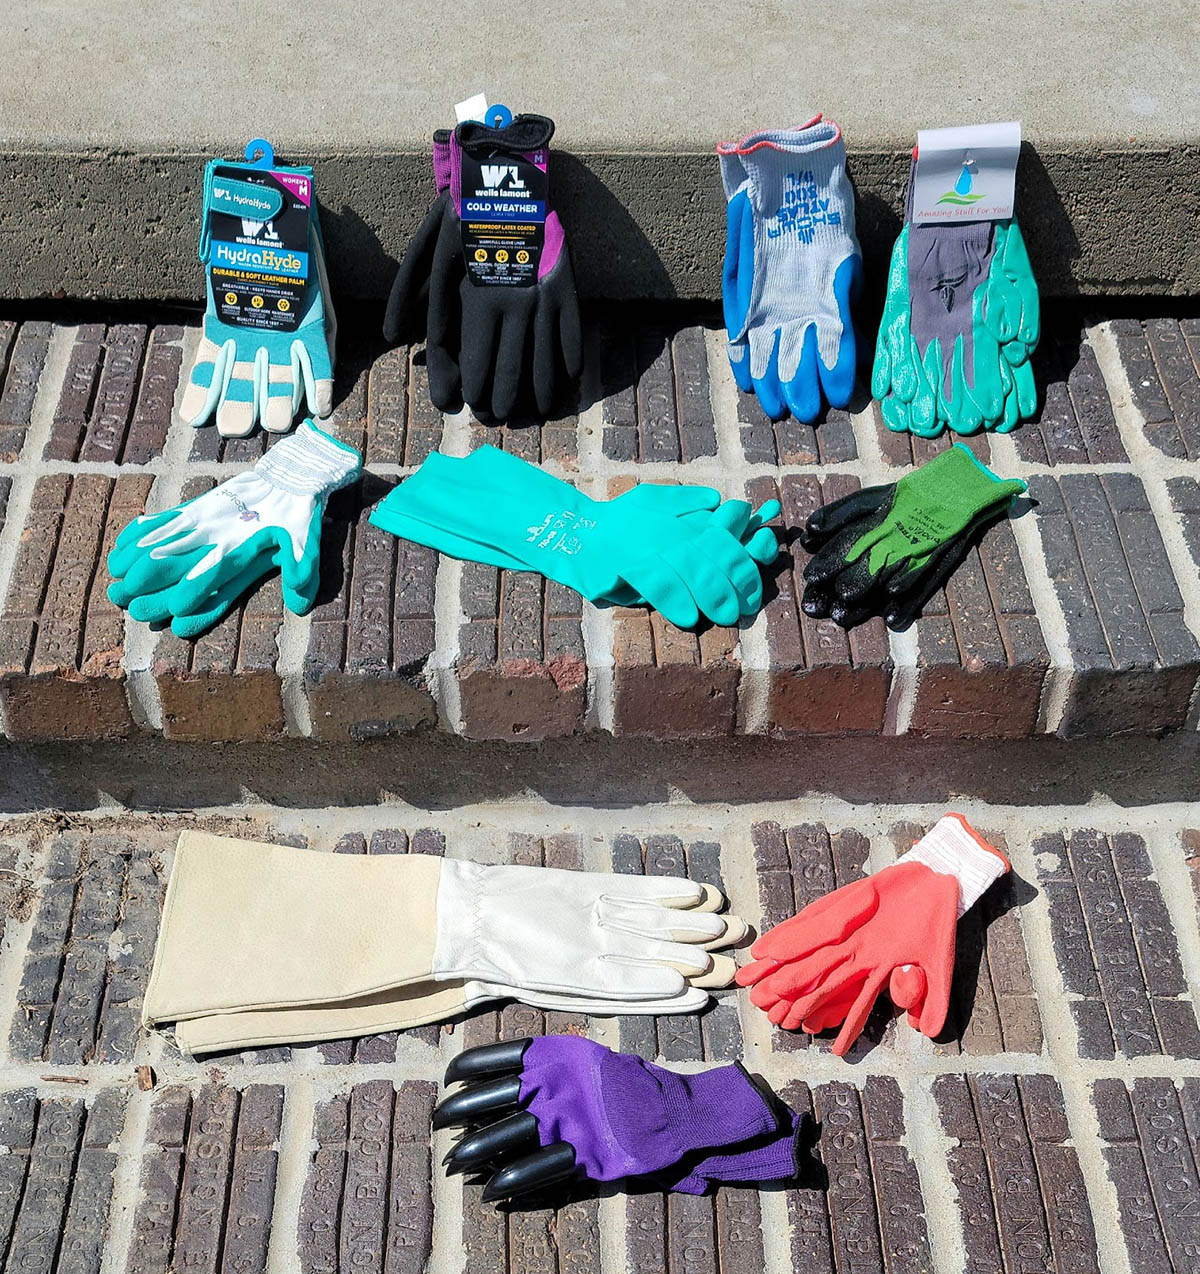 The Best Gardening Gloves - Tested by Bob Vila